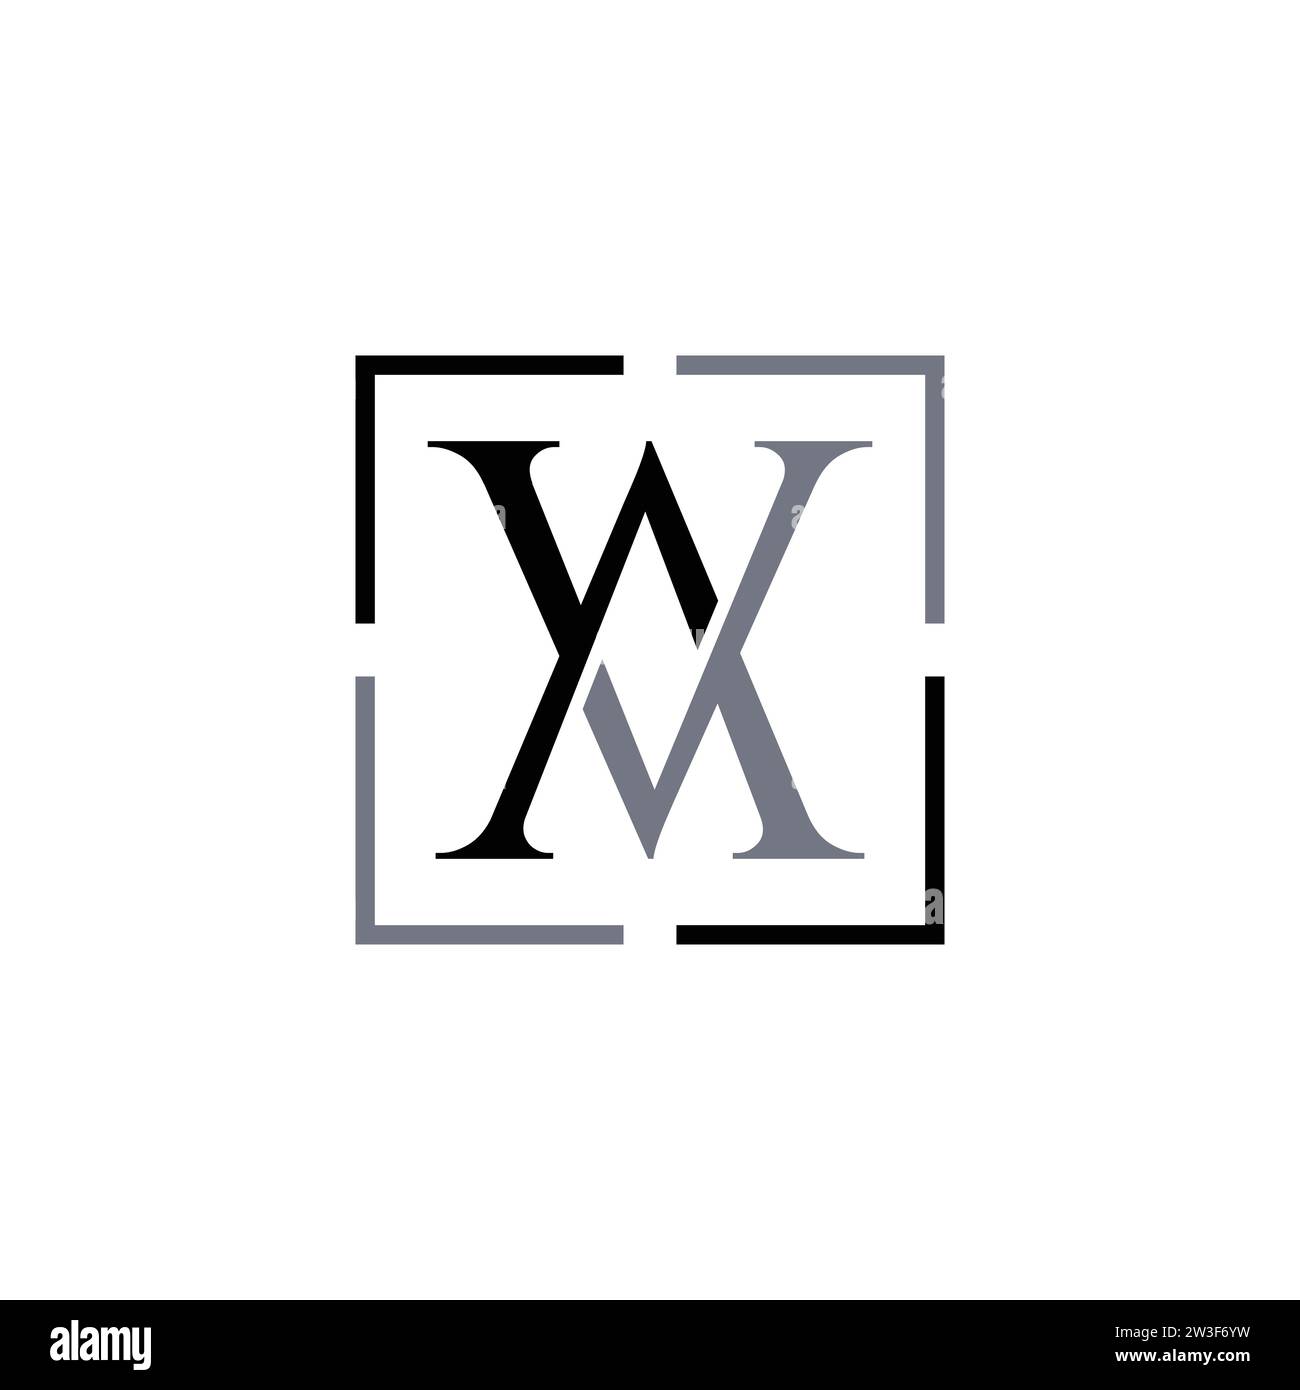 VA-Logo-Monogramm mit überlappender Designvorlage. Mit Buchstabe VA verknüpftes überlappendes Logo-Vektor-Bilddesign Stock Vektor